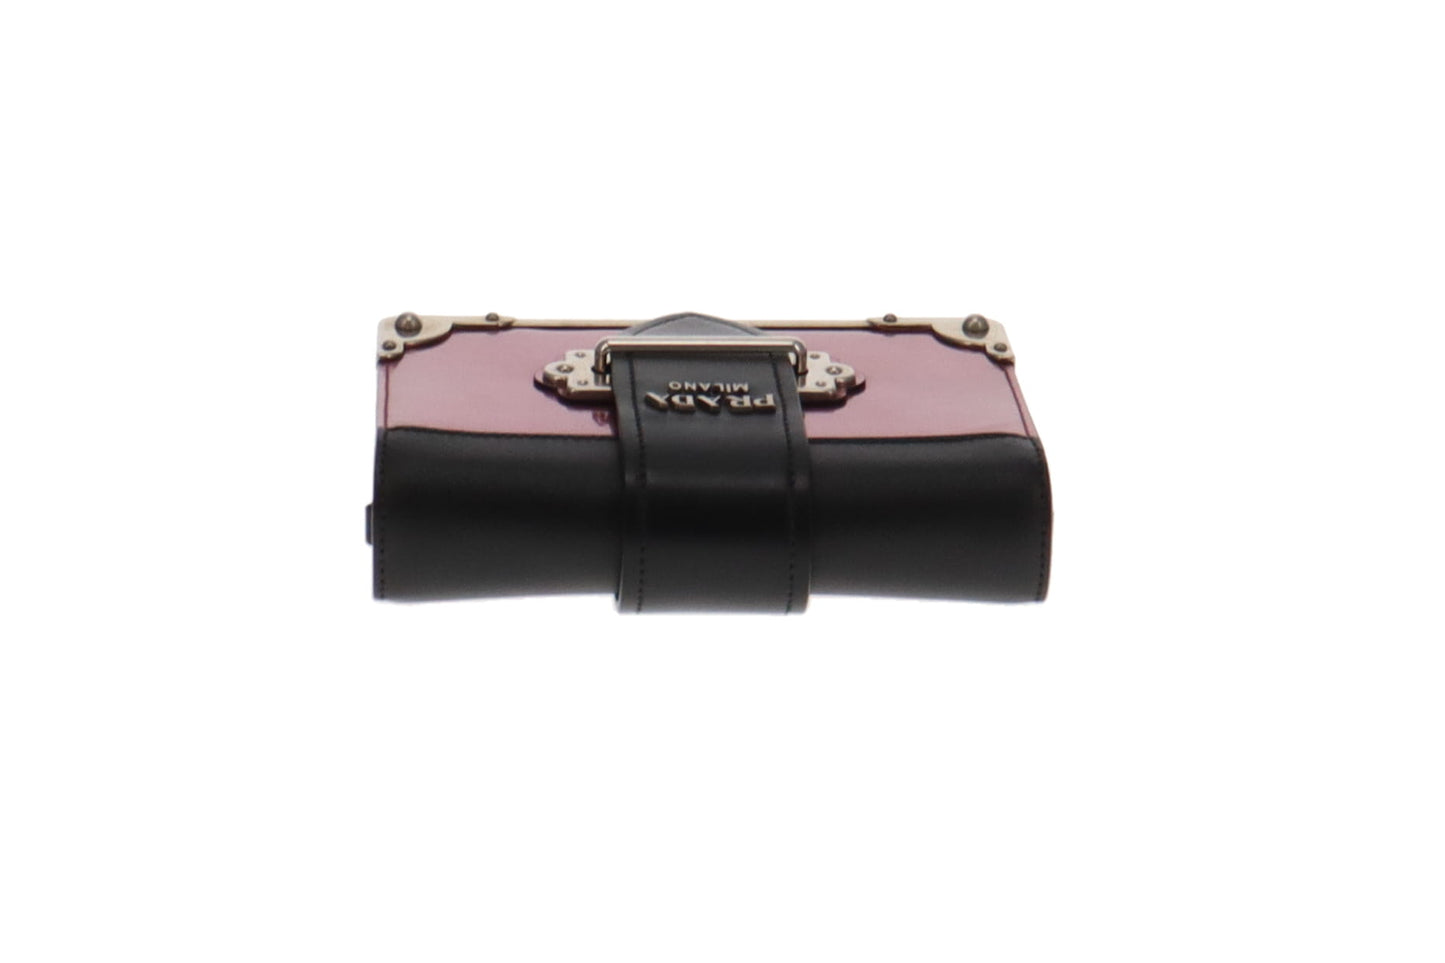 Prada Metallic Pink and Black Saffiano Cahier Chain Shoulder Bag